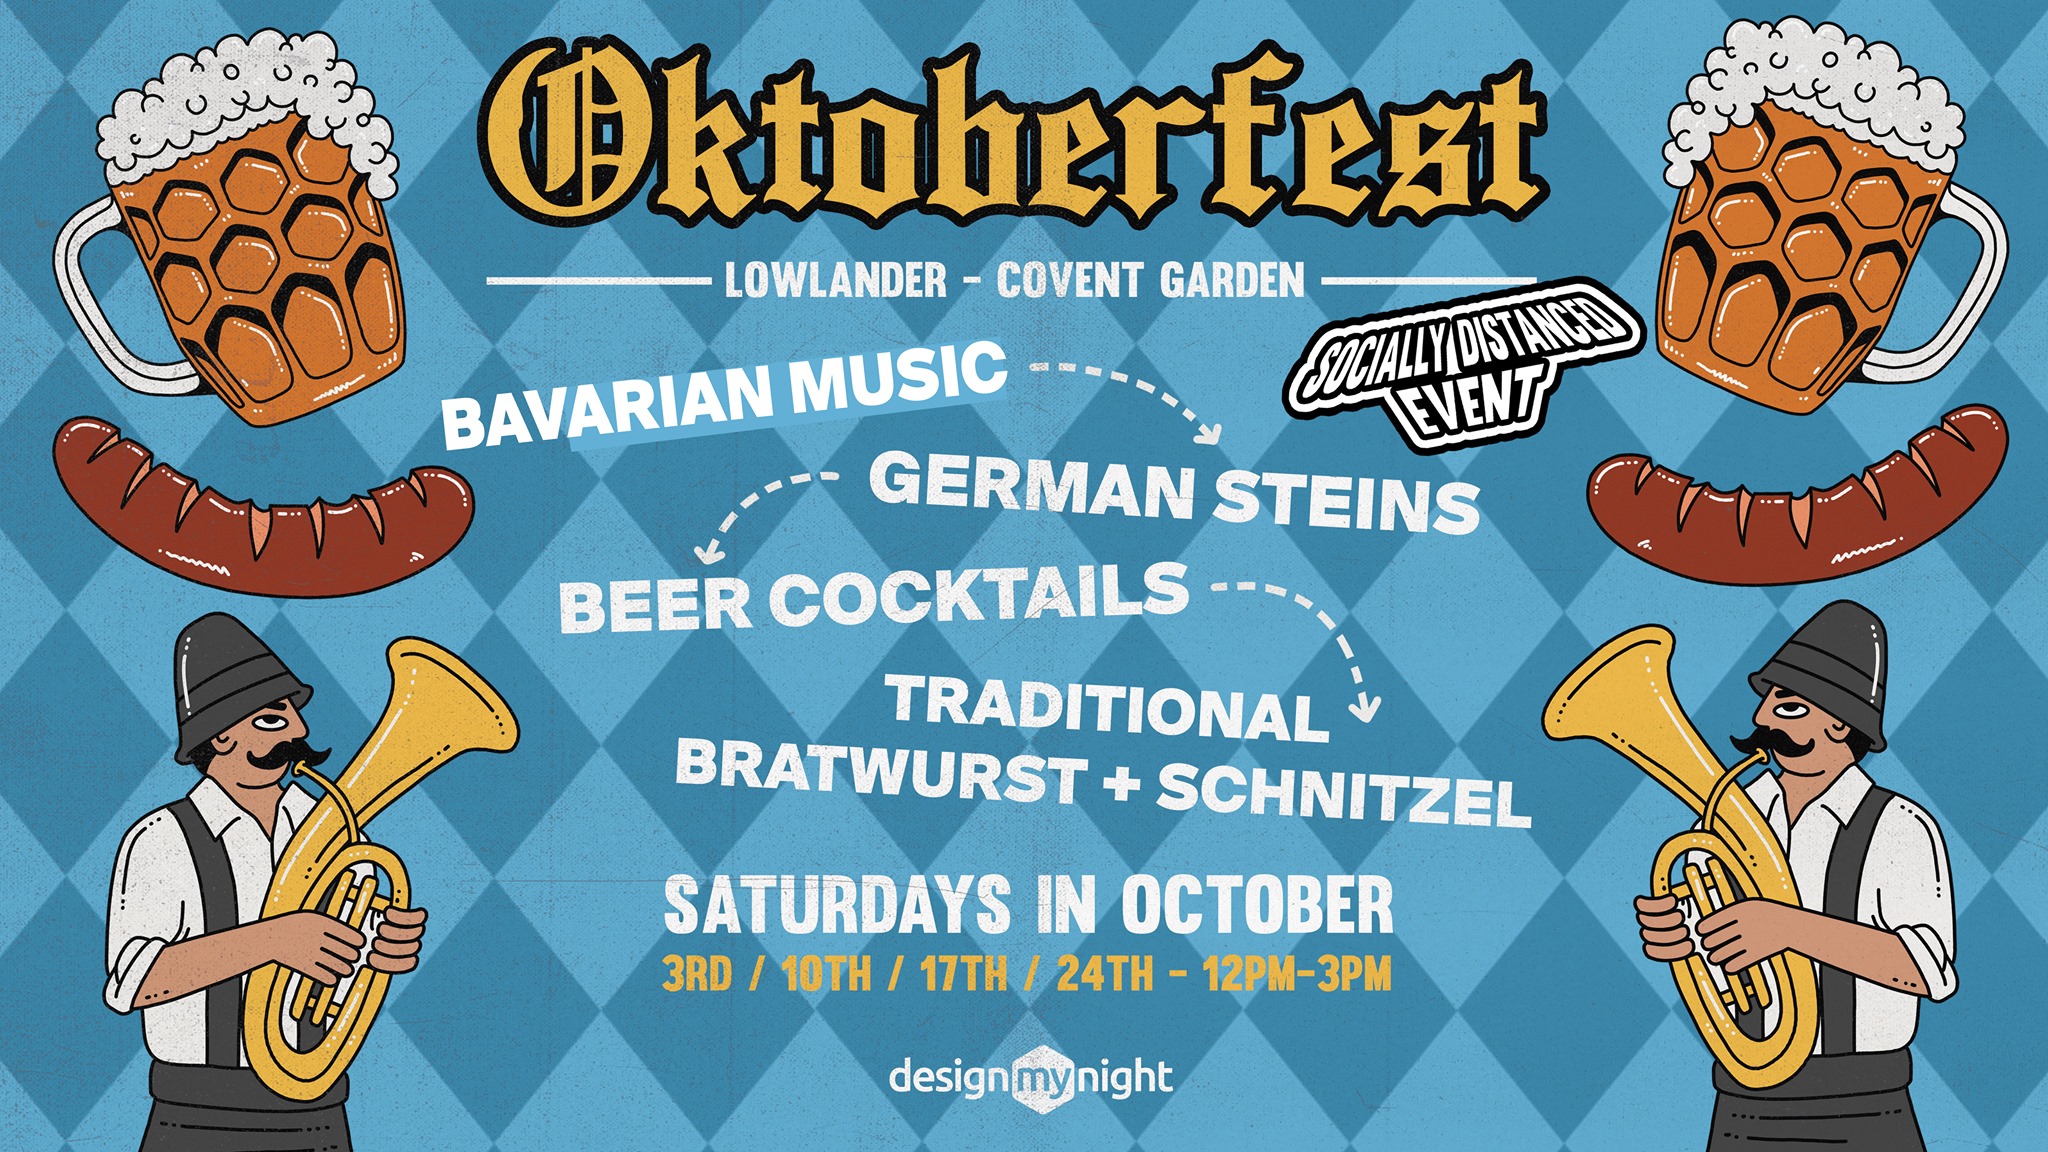 Oktoberfest Covent Garden - Saturday 10th October at Lowlander Grand